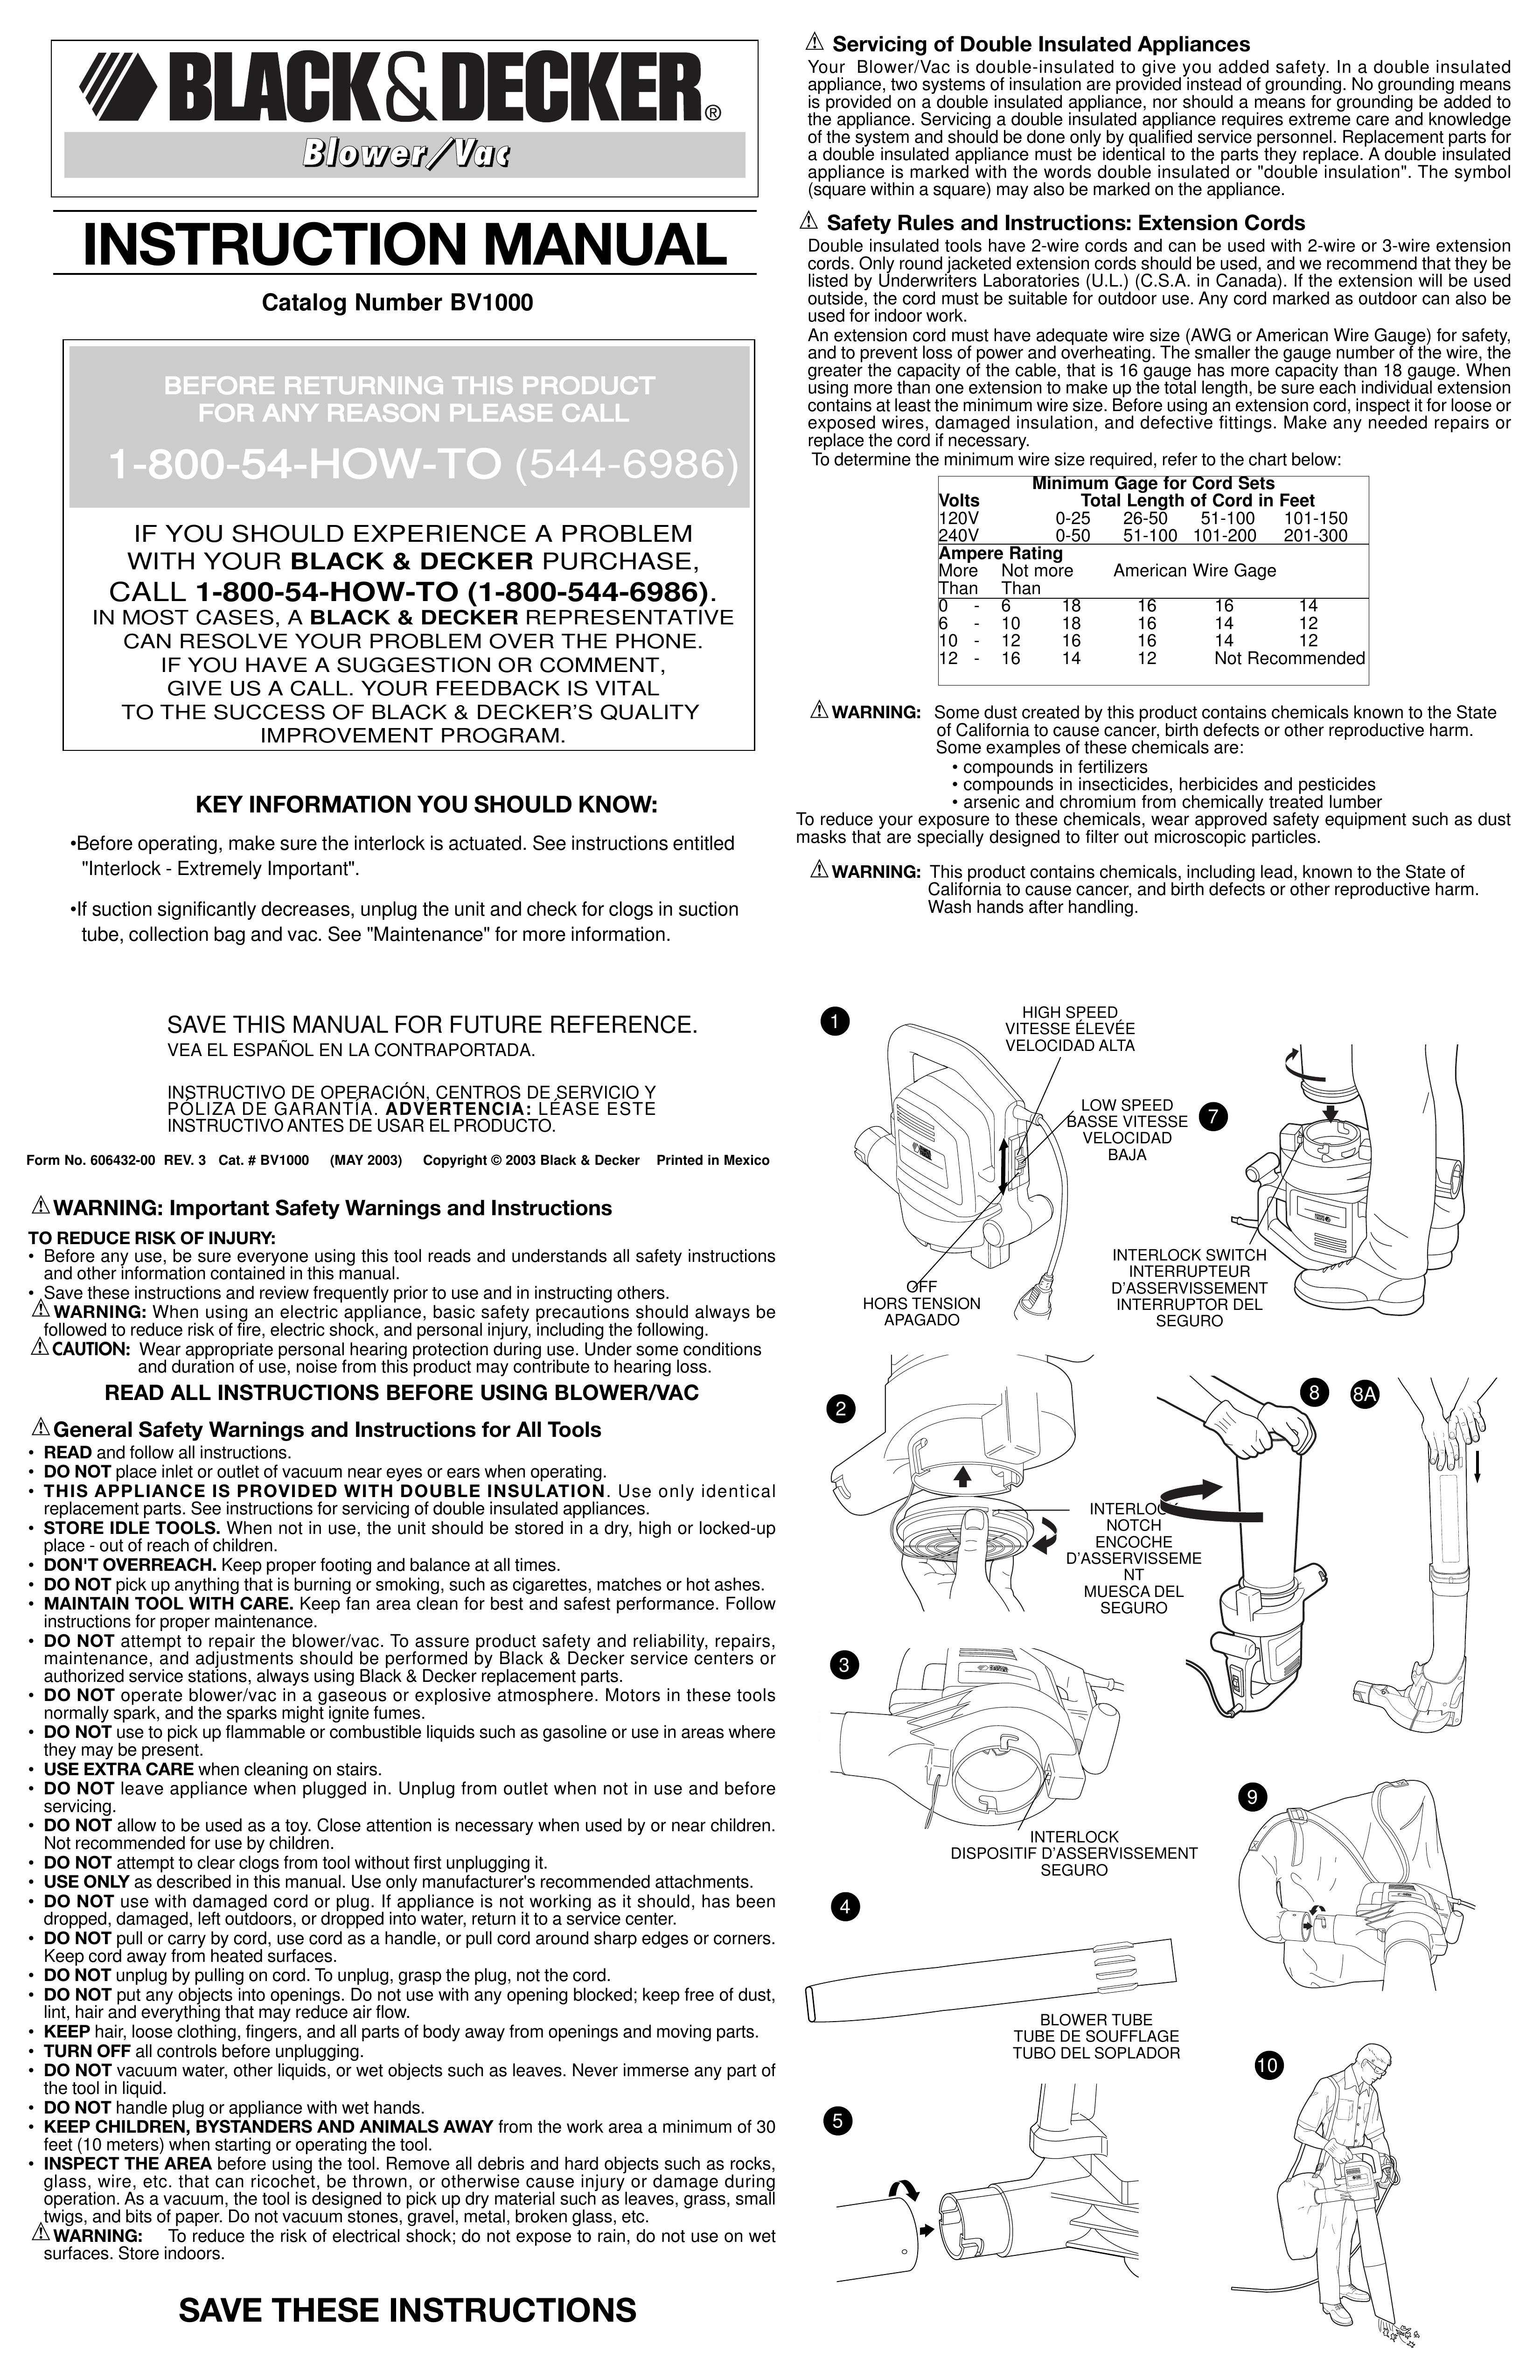 Black & Decker 606432-00 Blower User Manual (Page 1)